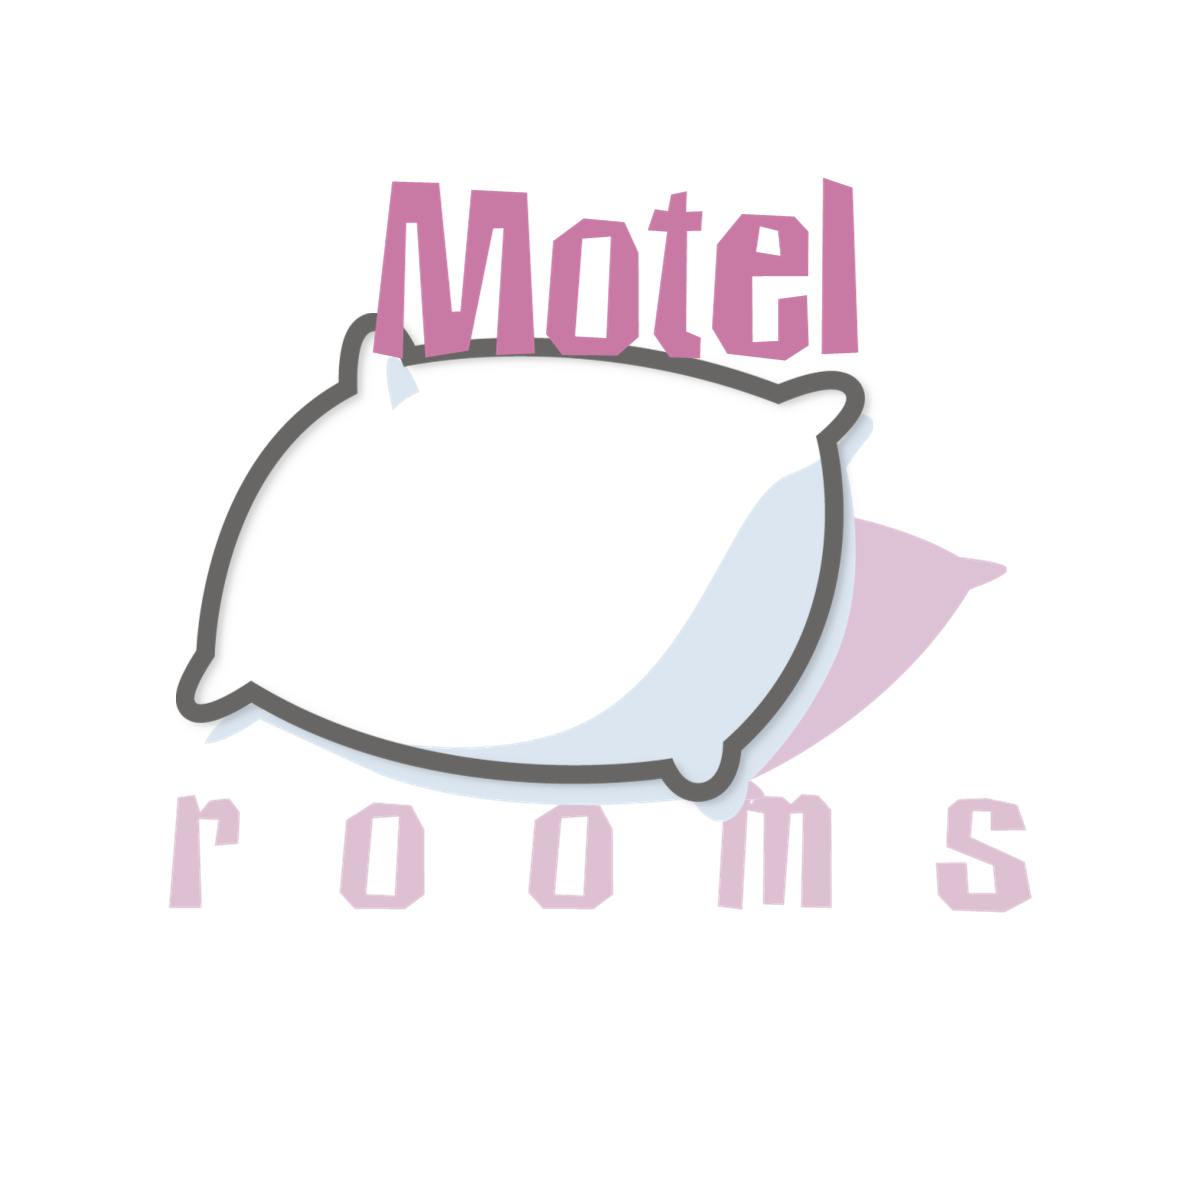 Motel Rooms Co Logo